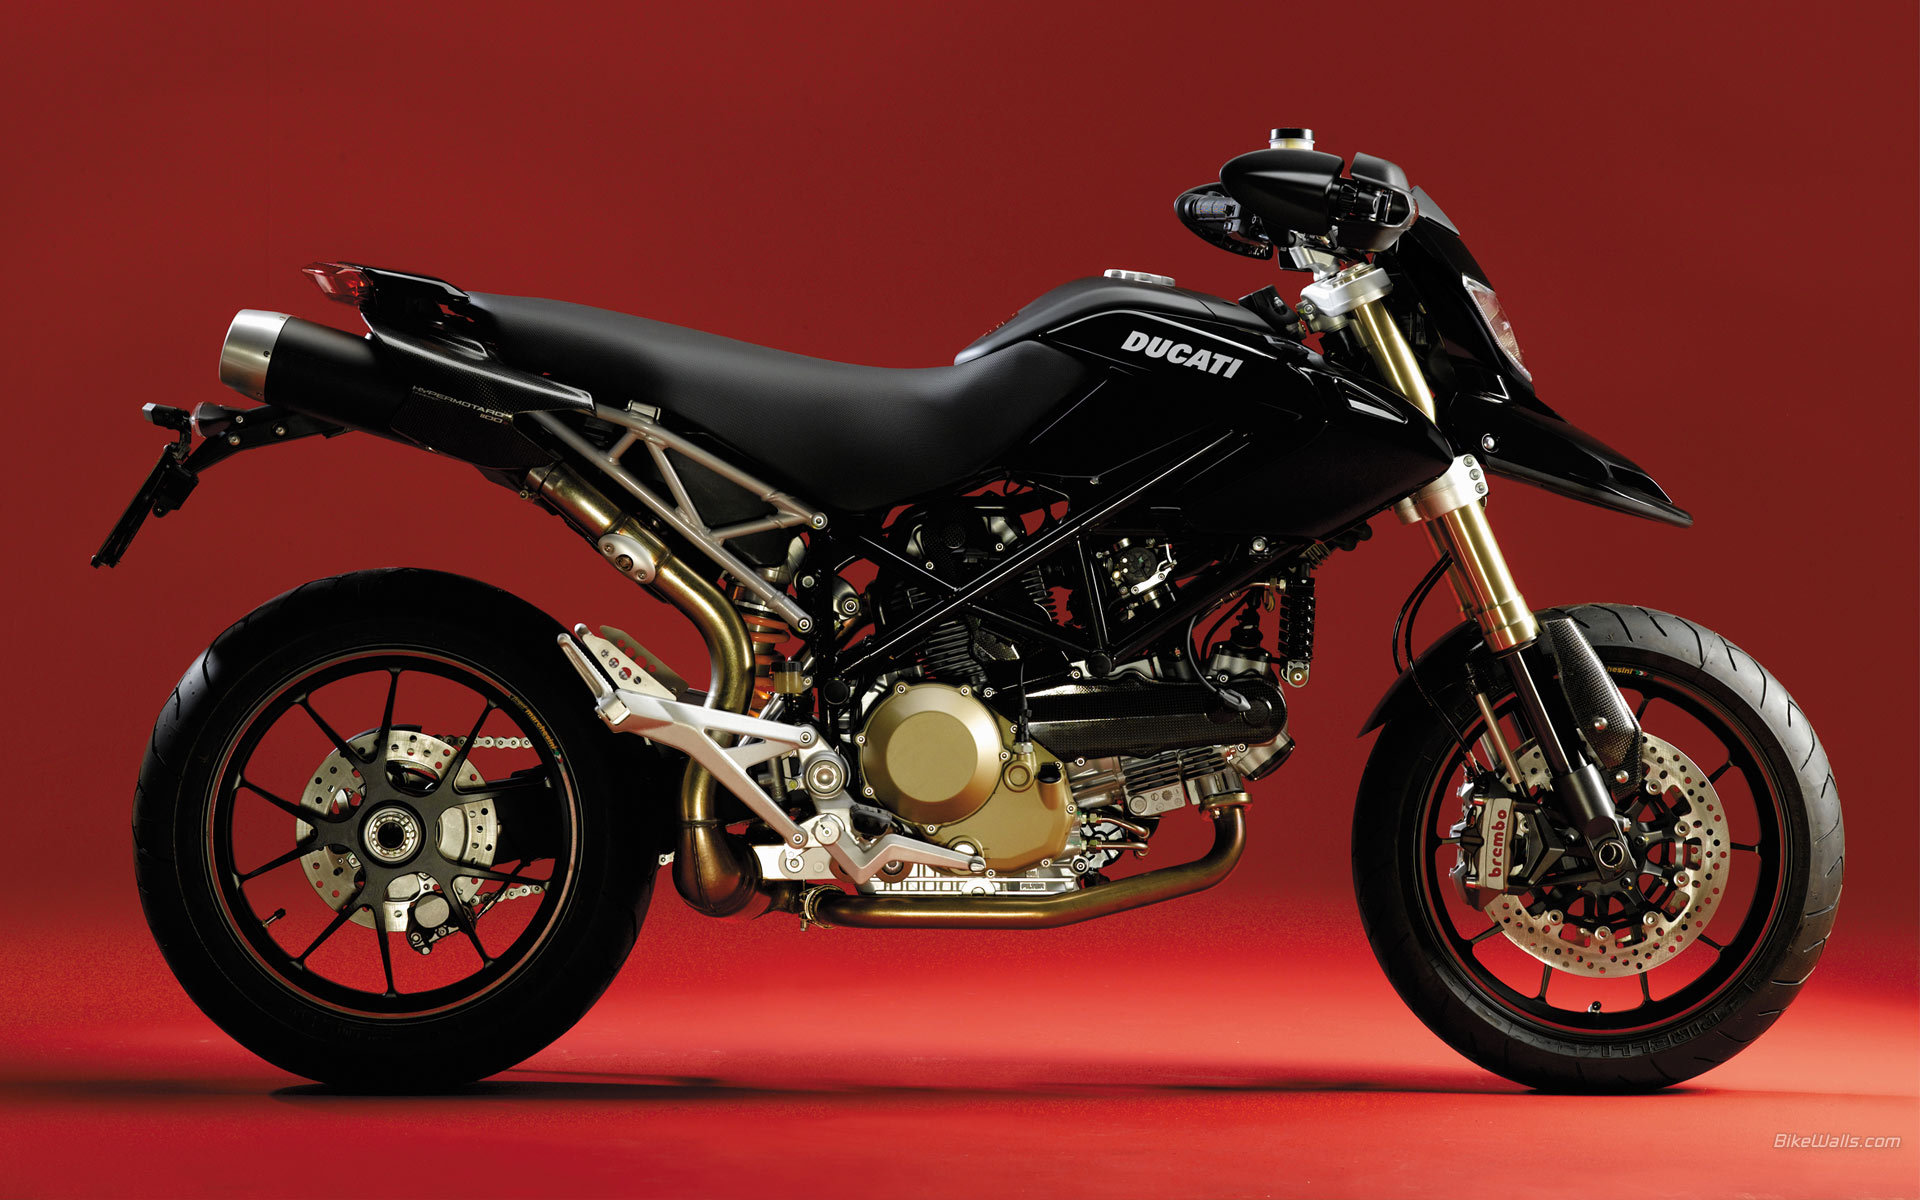 Télécharger des fonds d'écran Ducati Hypermotard HD